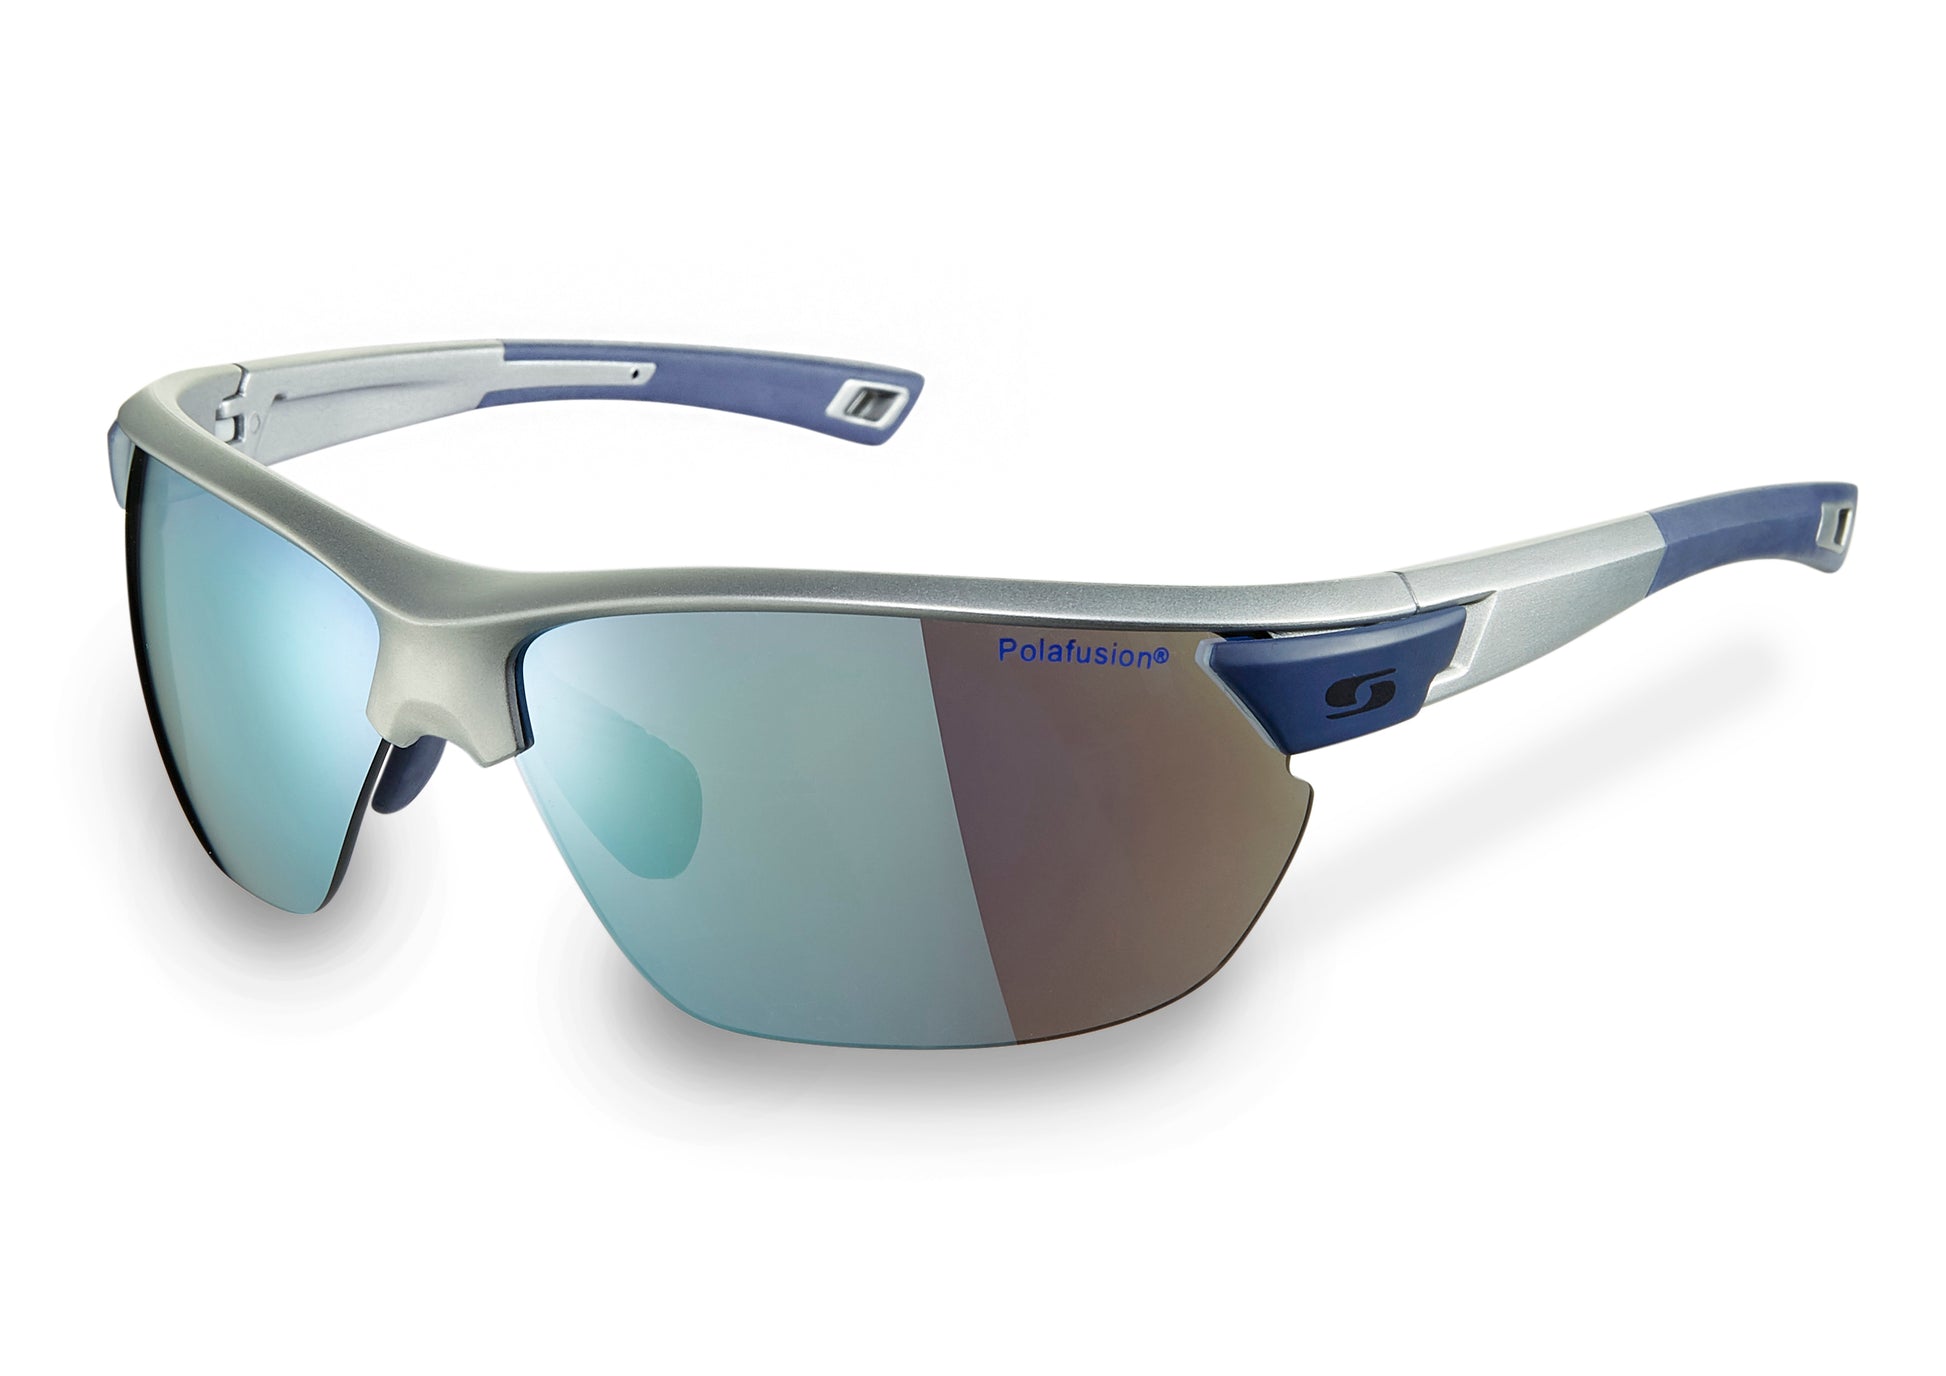 Sunwise Blenheim sports sunglasses in silver